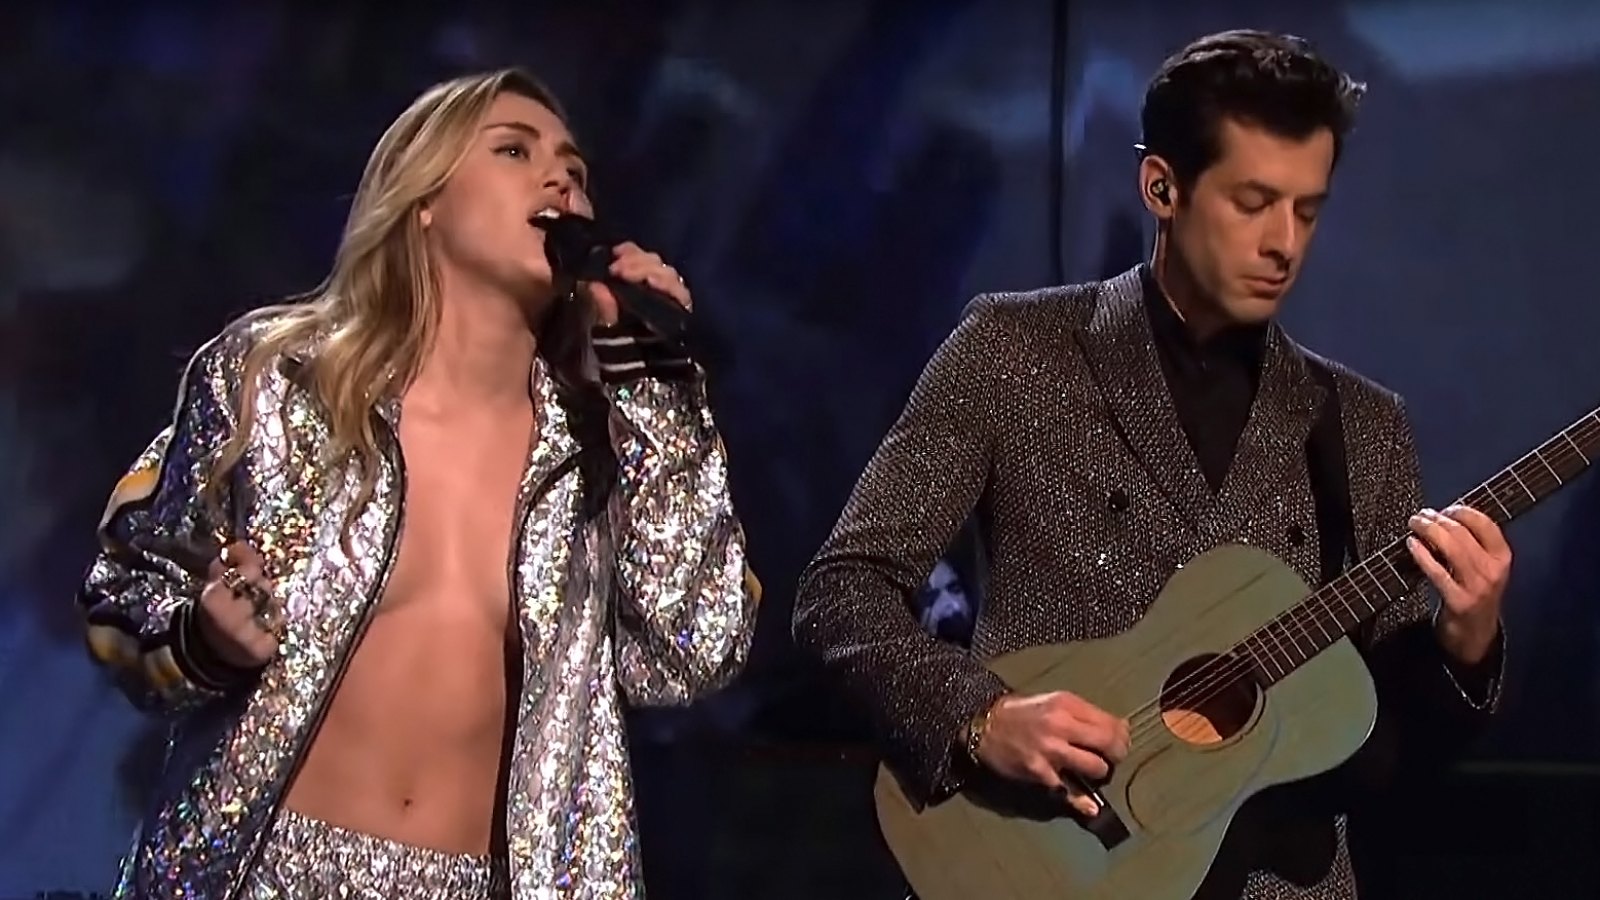 Miley Cyrus Sings Topless, Risks a Nip-Slip on SNL: Reactions